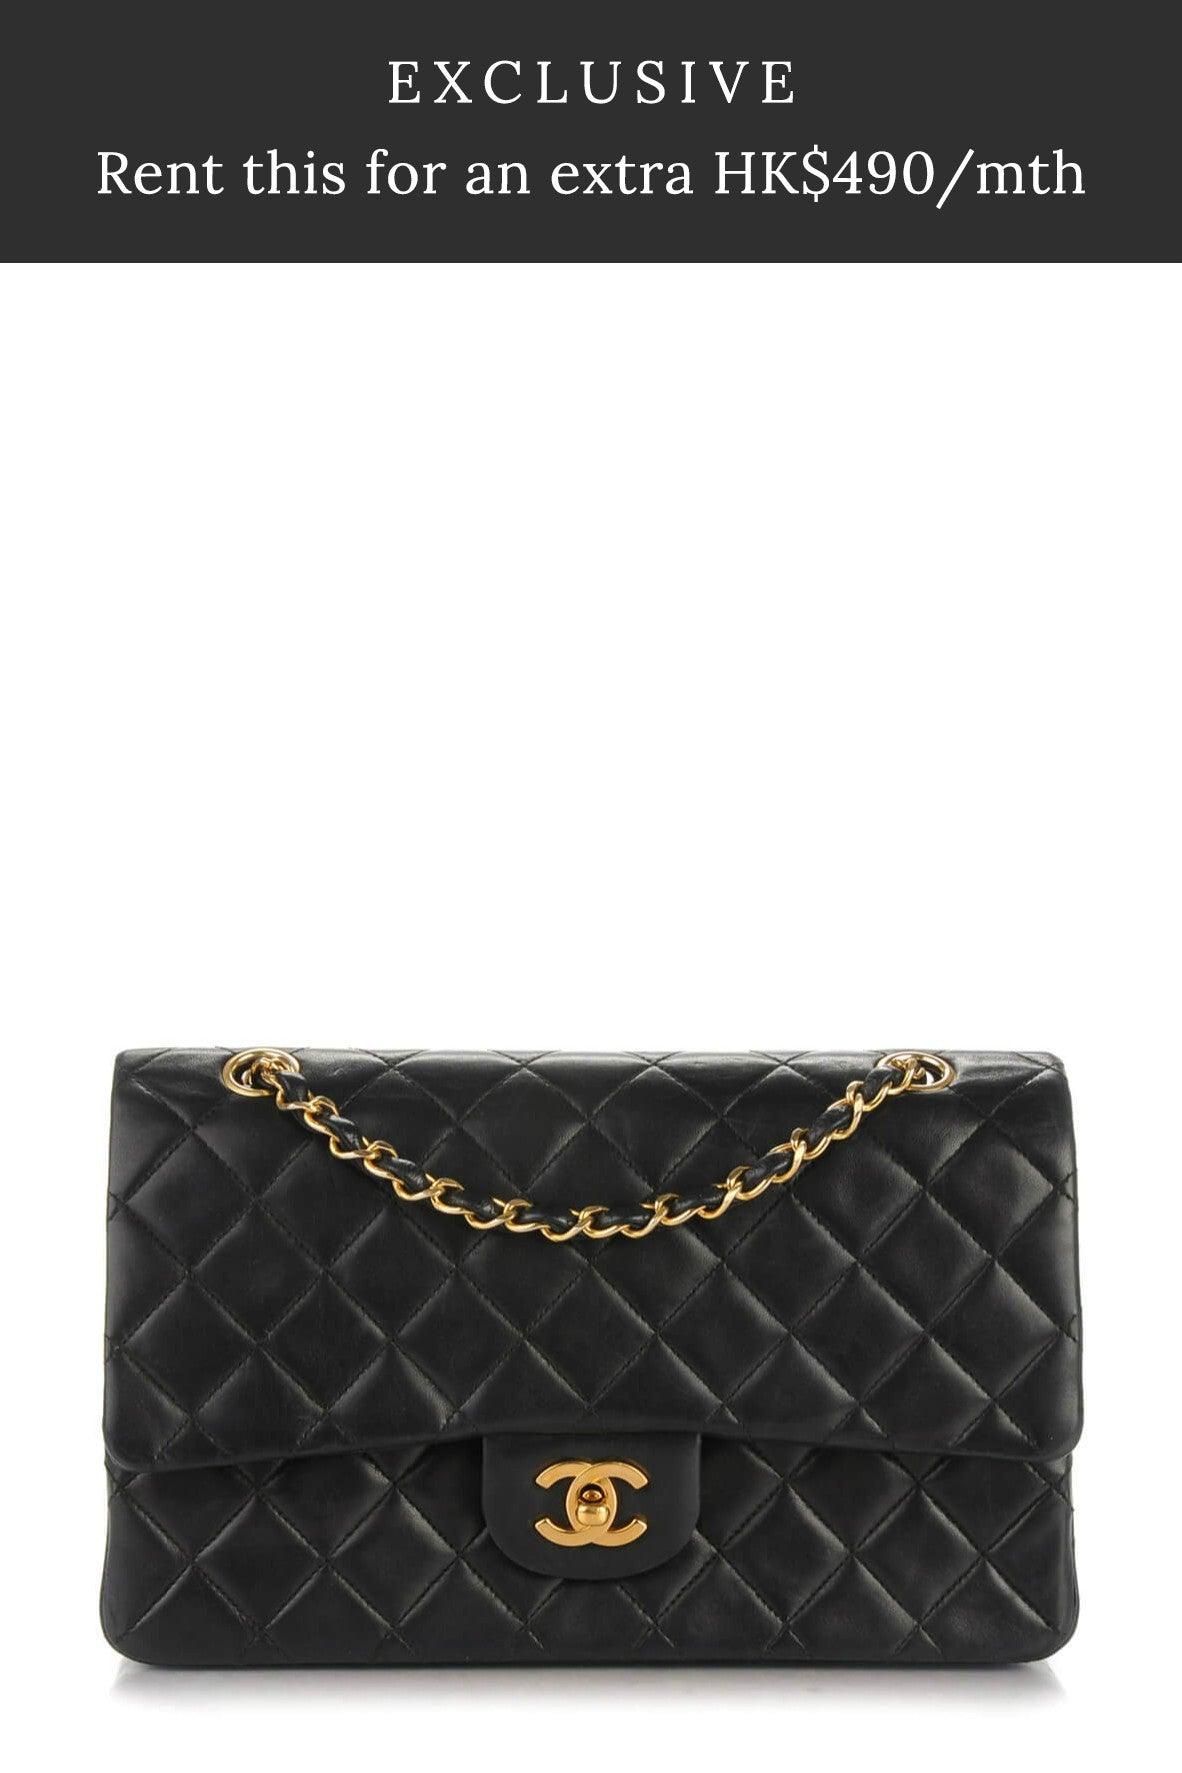 Chanel Black Caviar Medium Classic Double Flap Bag Silver Hardware   Madison Avenue Couture